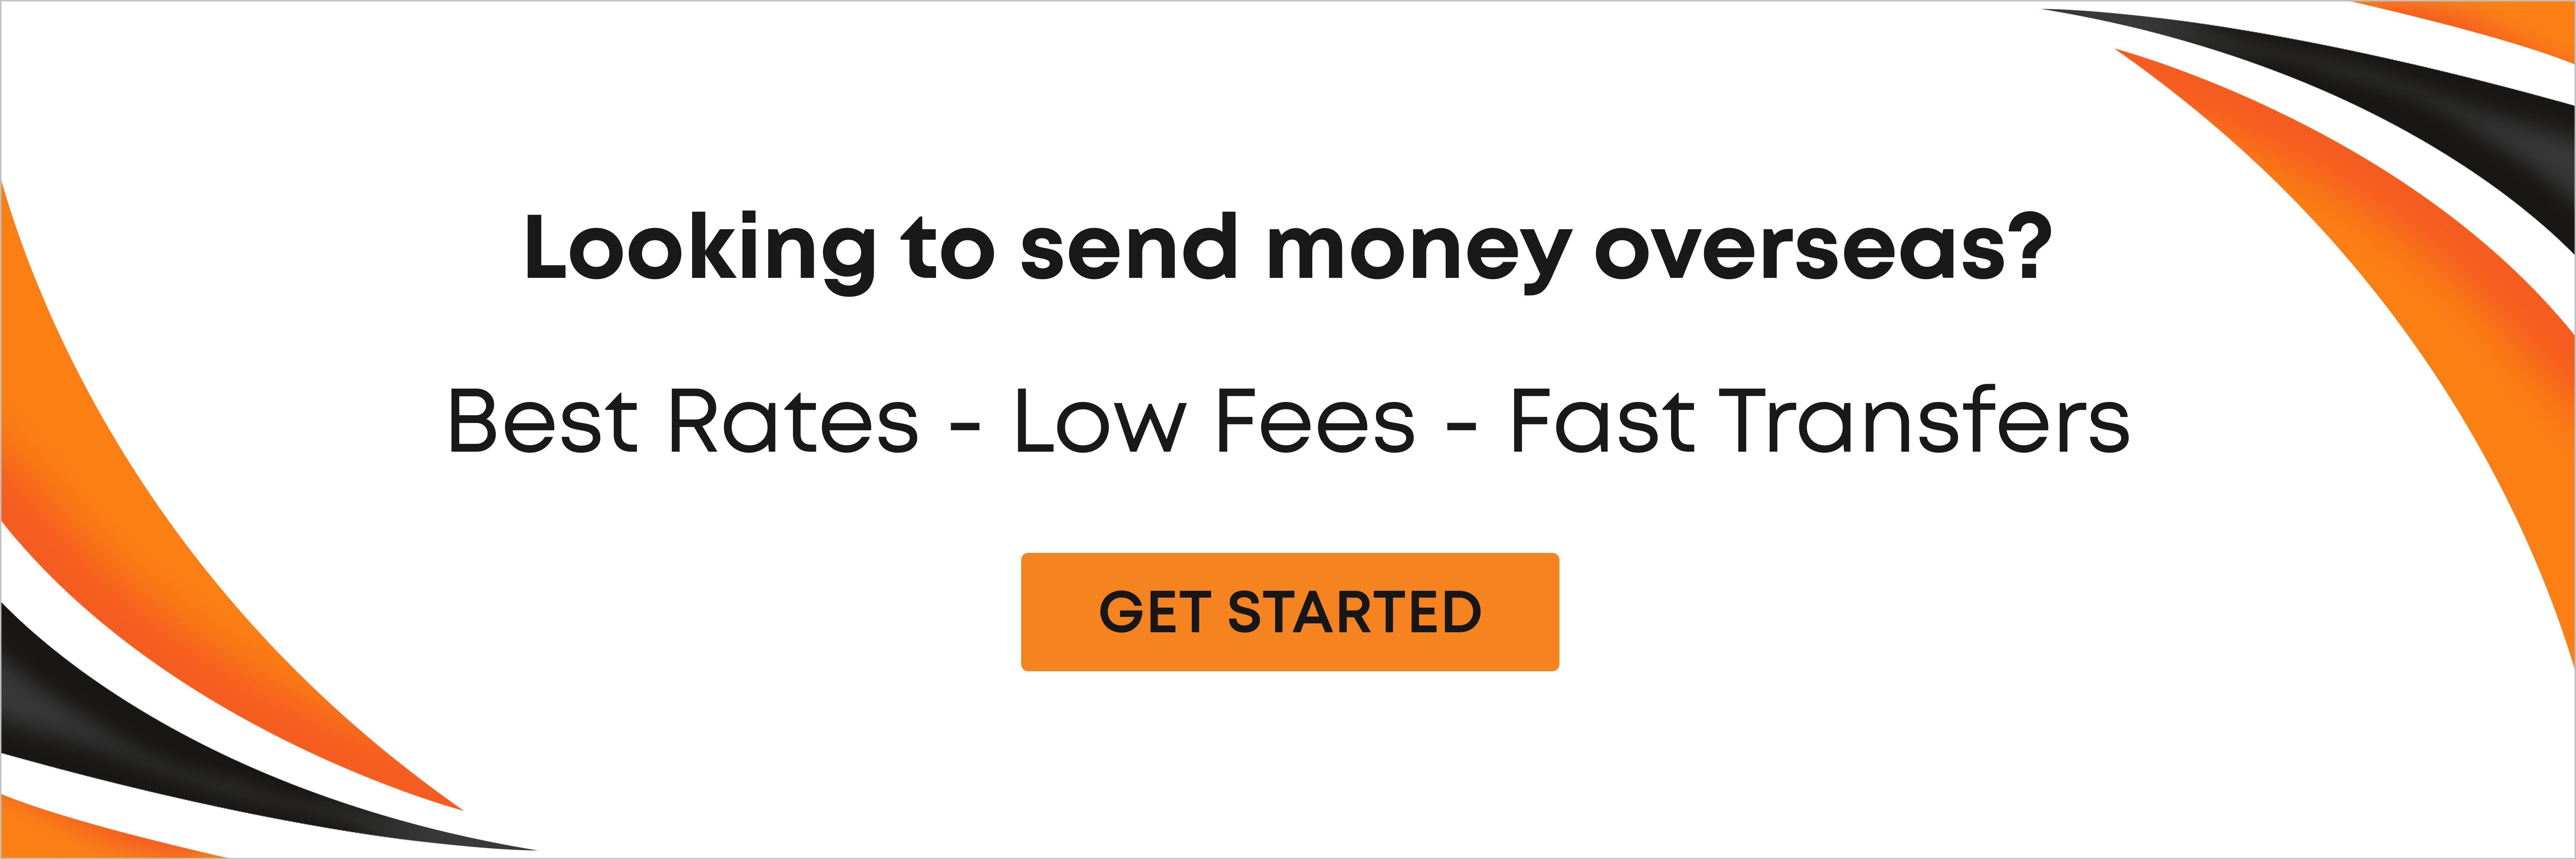 Send Money Overseas - CTA